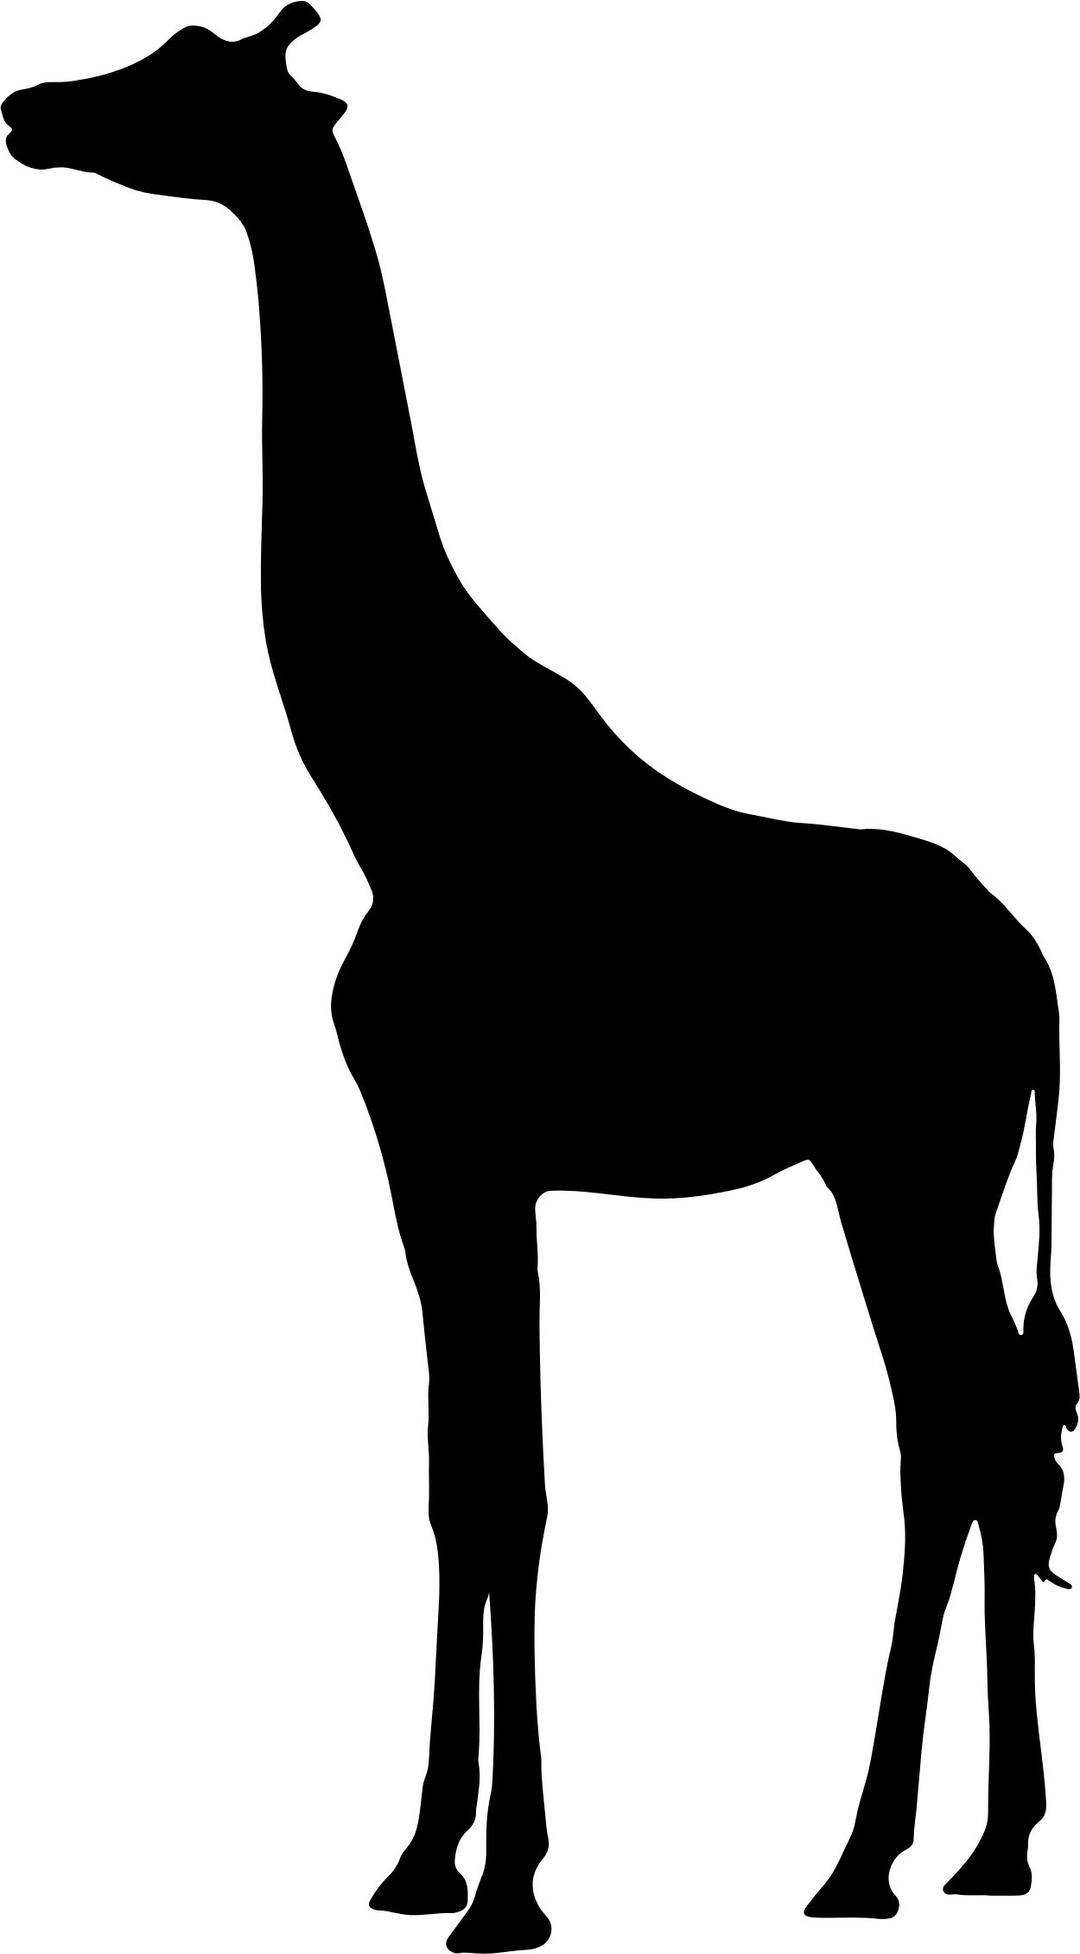 Giraffe Silhouette 3 png transparent